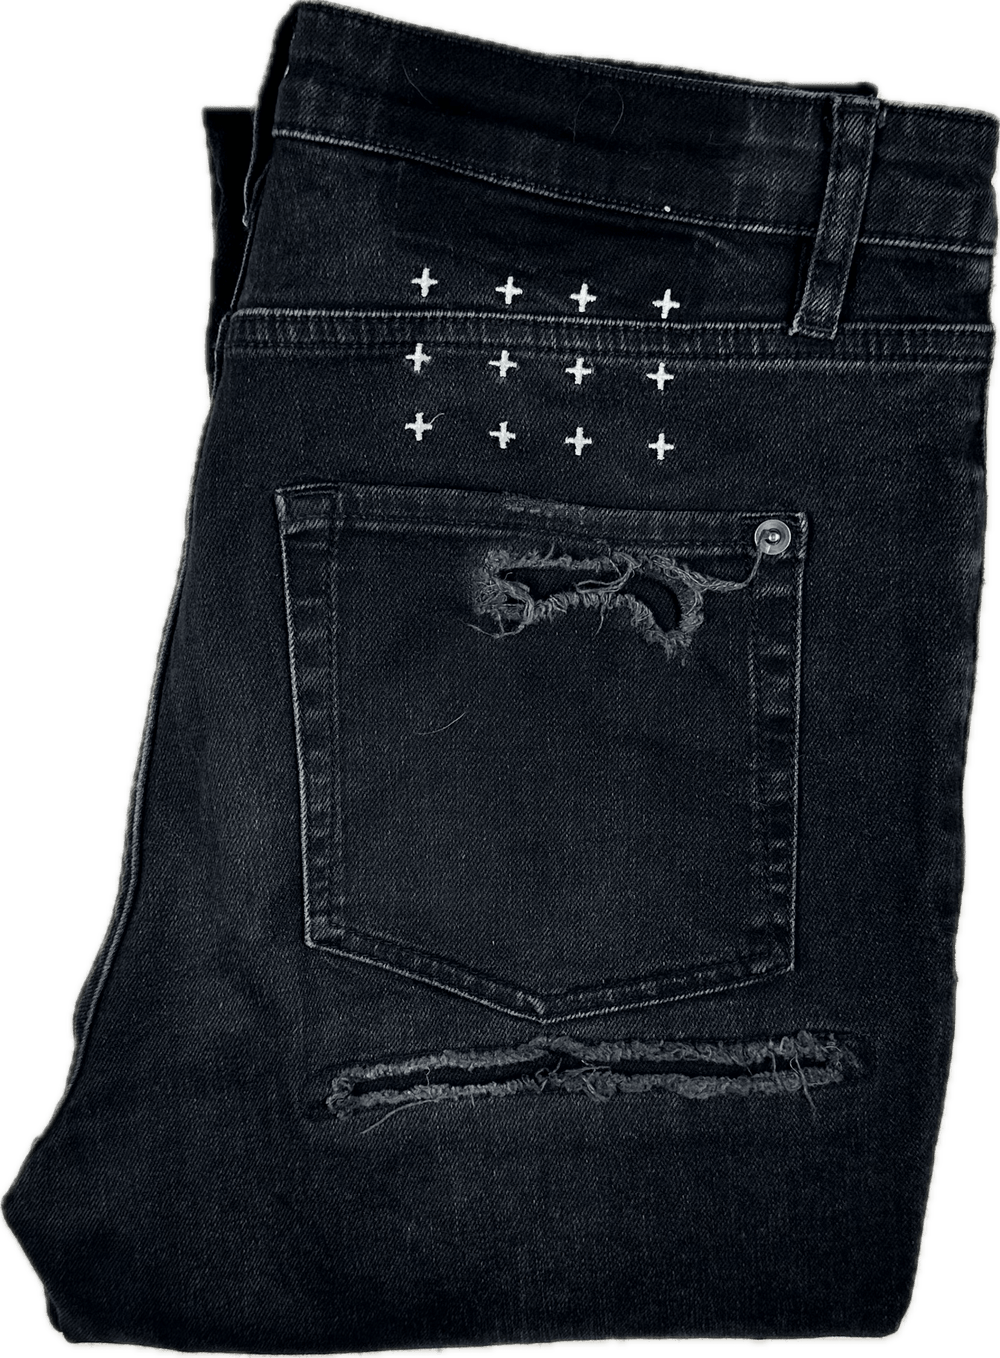 Ksubi High Rise Distressed Black Skinny Jeans - Size 28 - Jean Pool